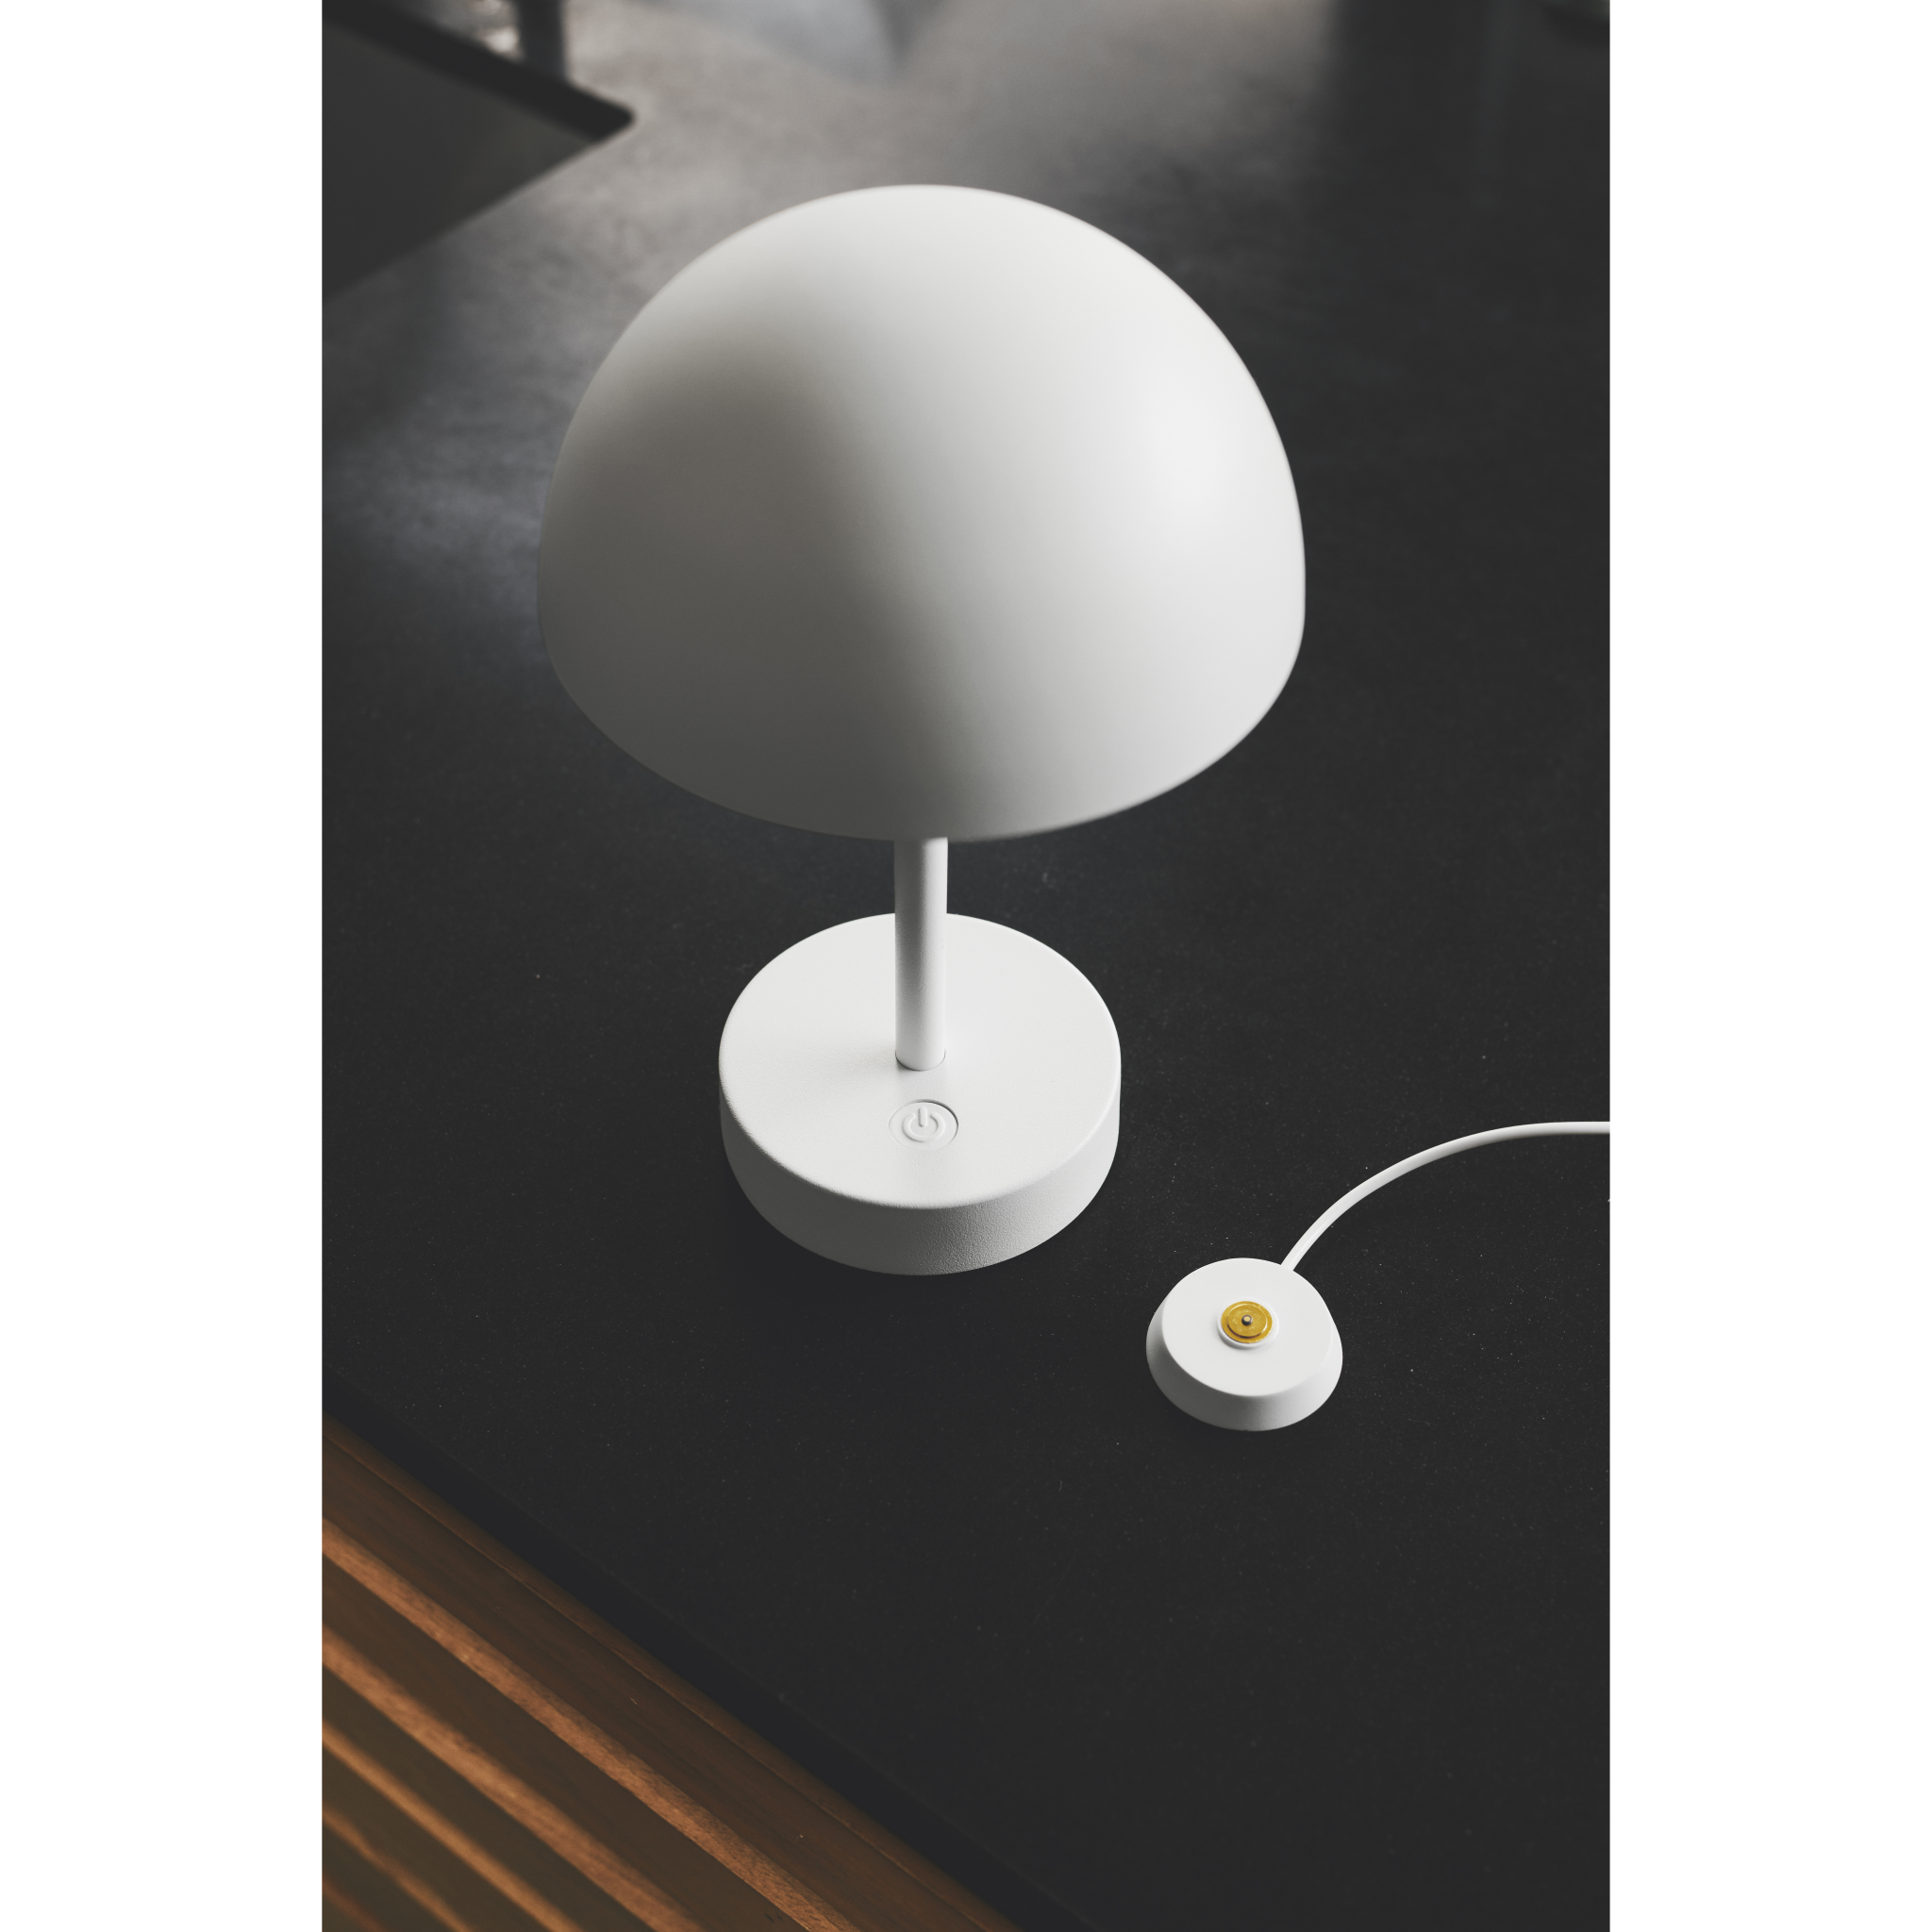 5704924017476 Nordlux Ellen To-Go hvid - Bordlampe portable Lamper,Bordlamper,Trådløse bordlamper 87100011590 2418015001